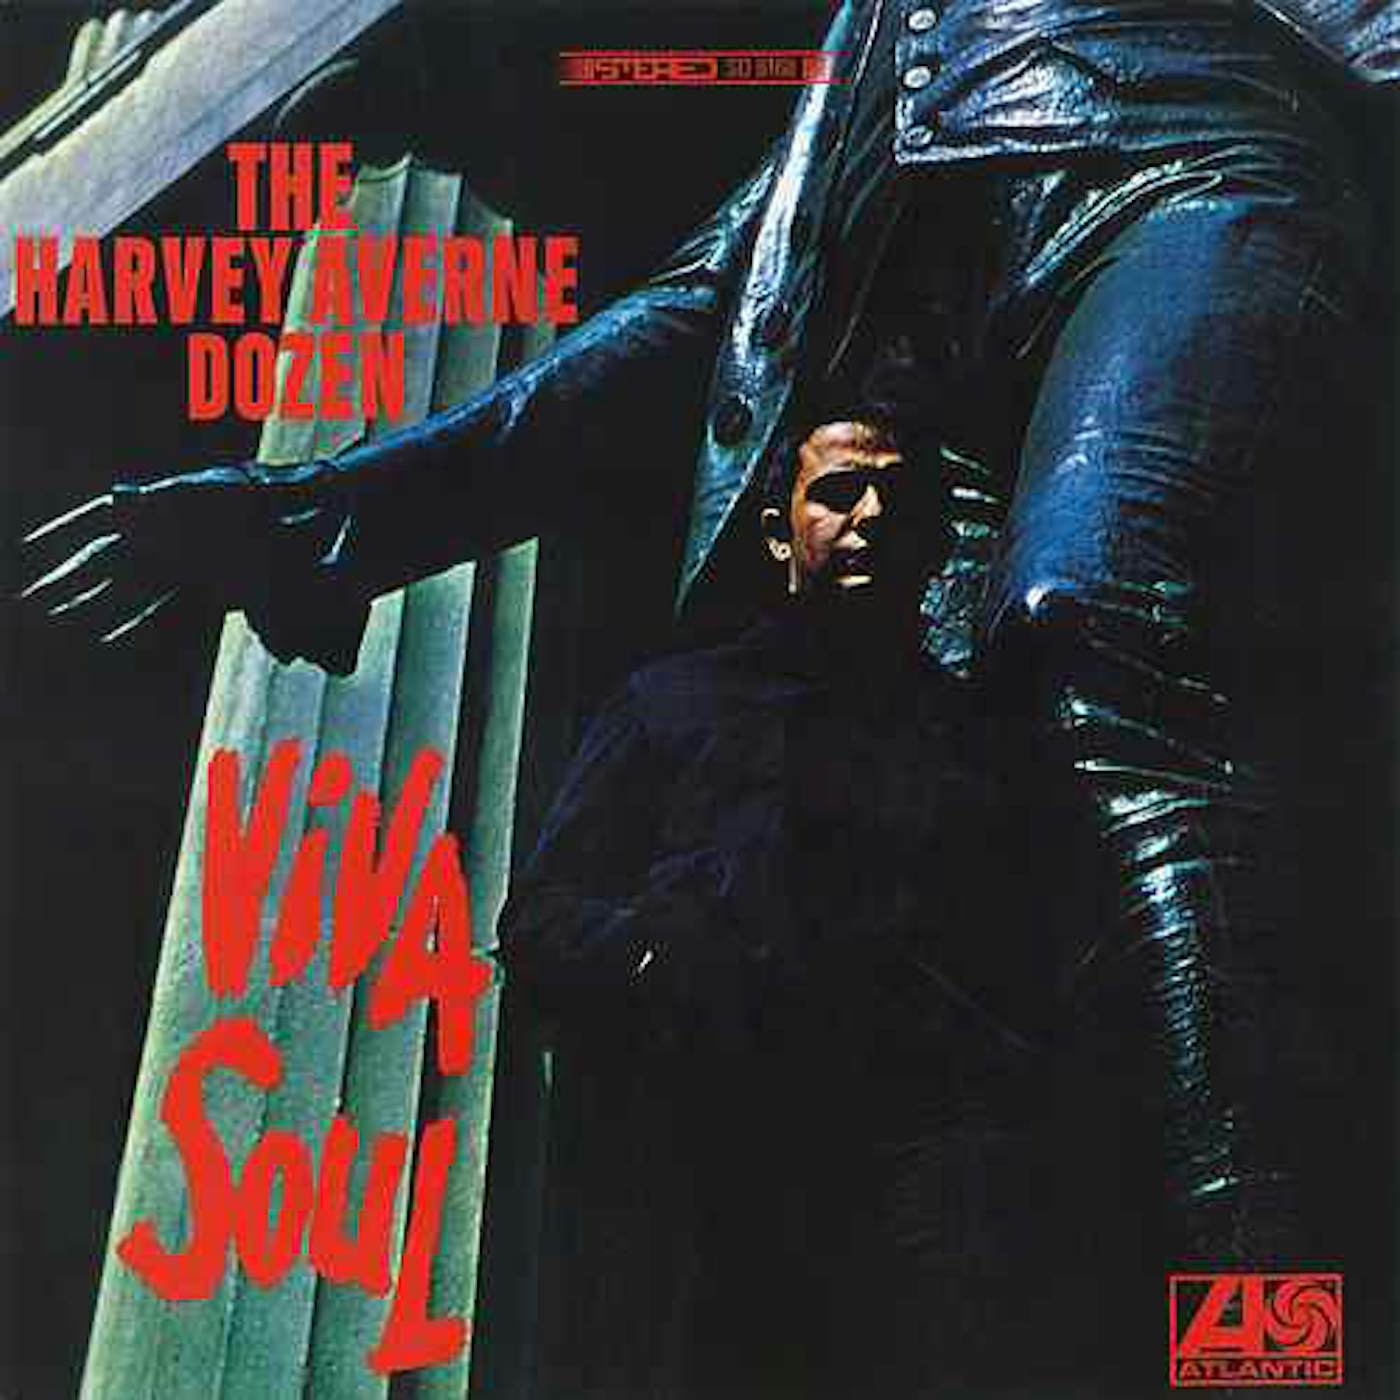 The Harvey Averne Dozen Viva Soul Vinyl Record